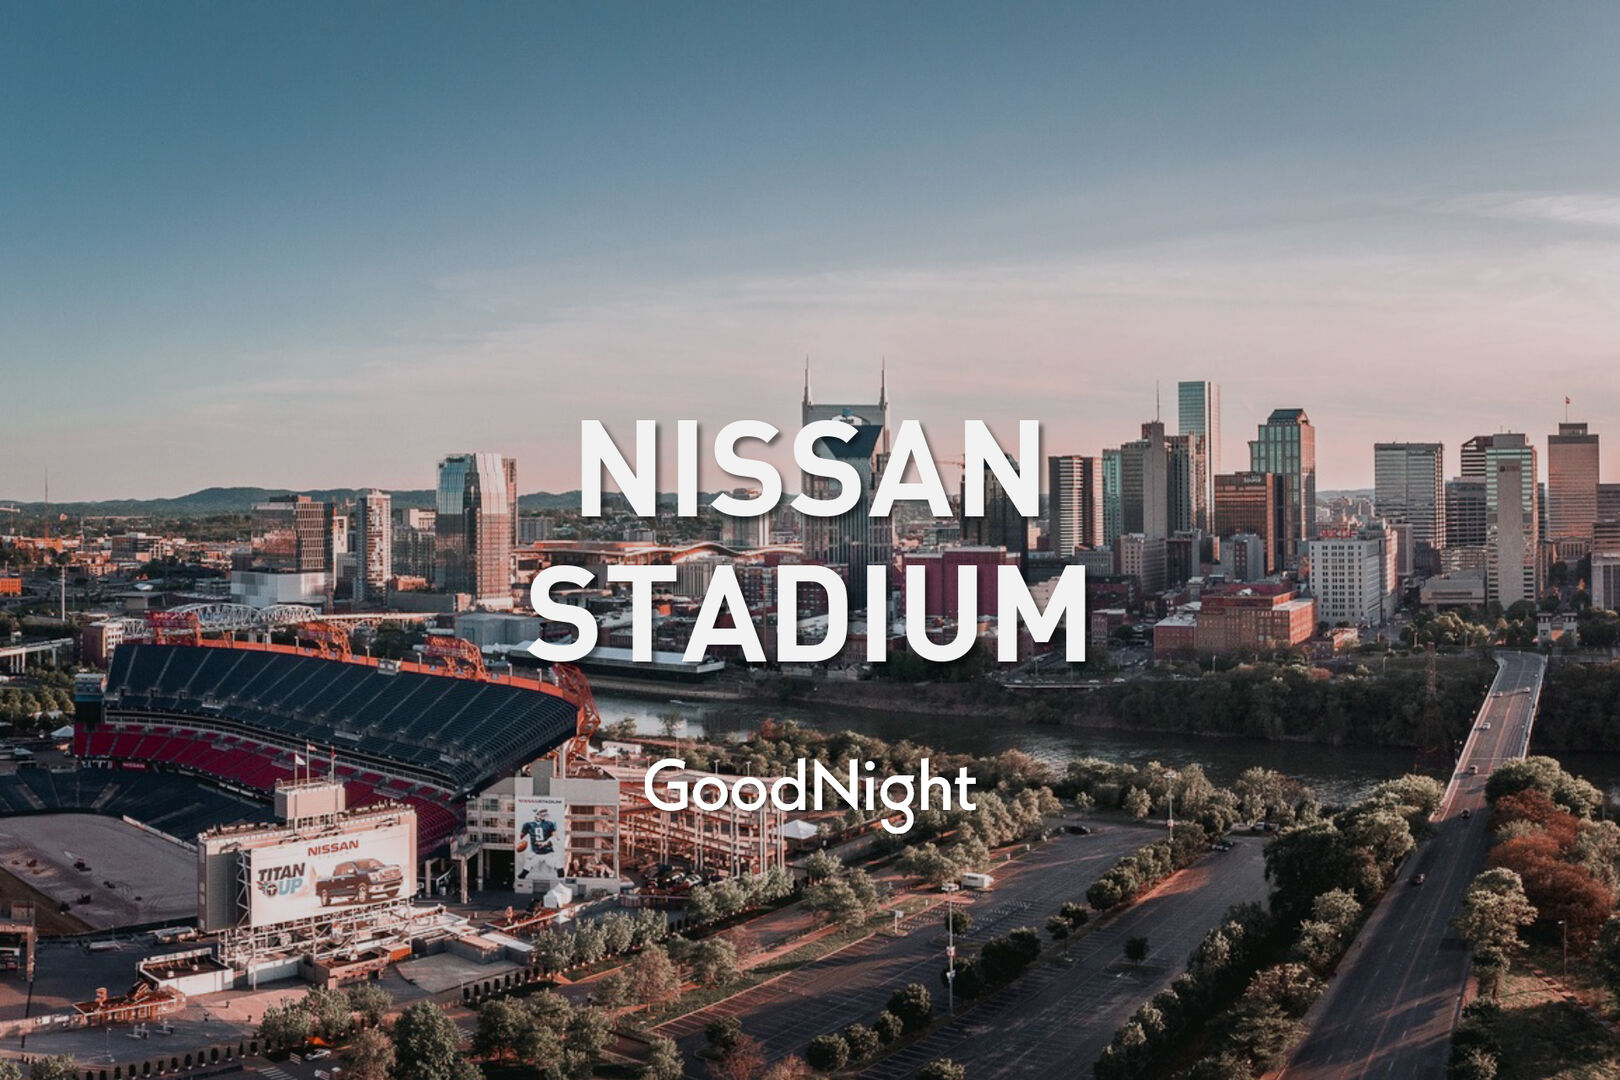 32 mins: Nissan Stadium